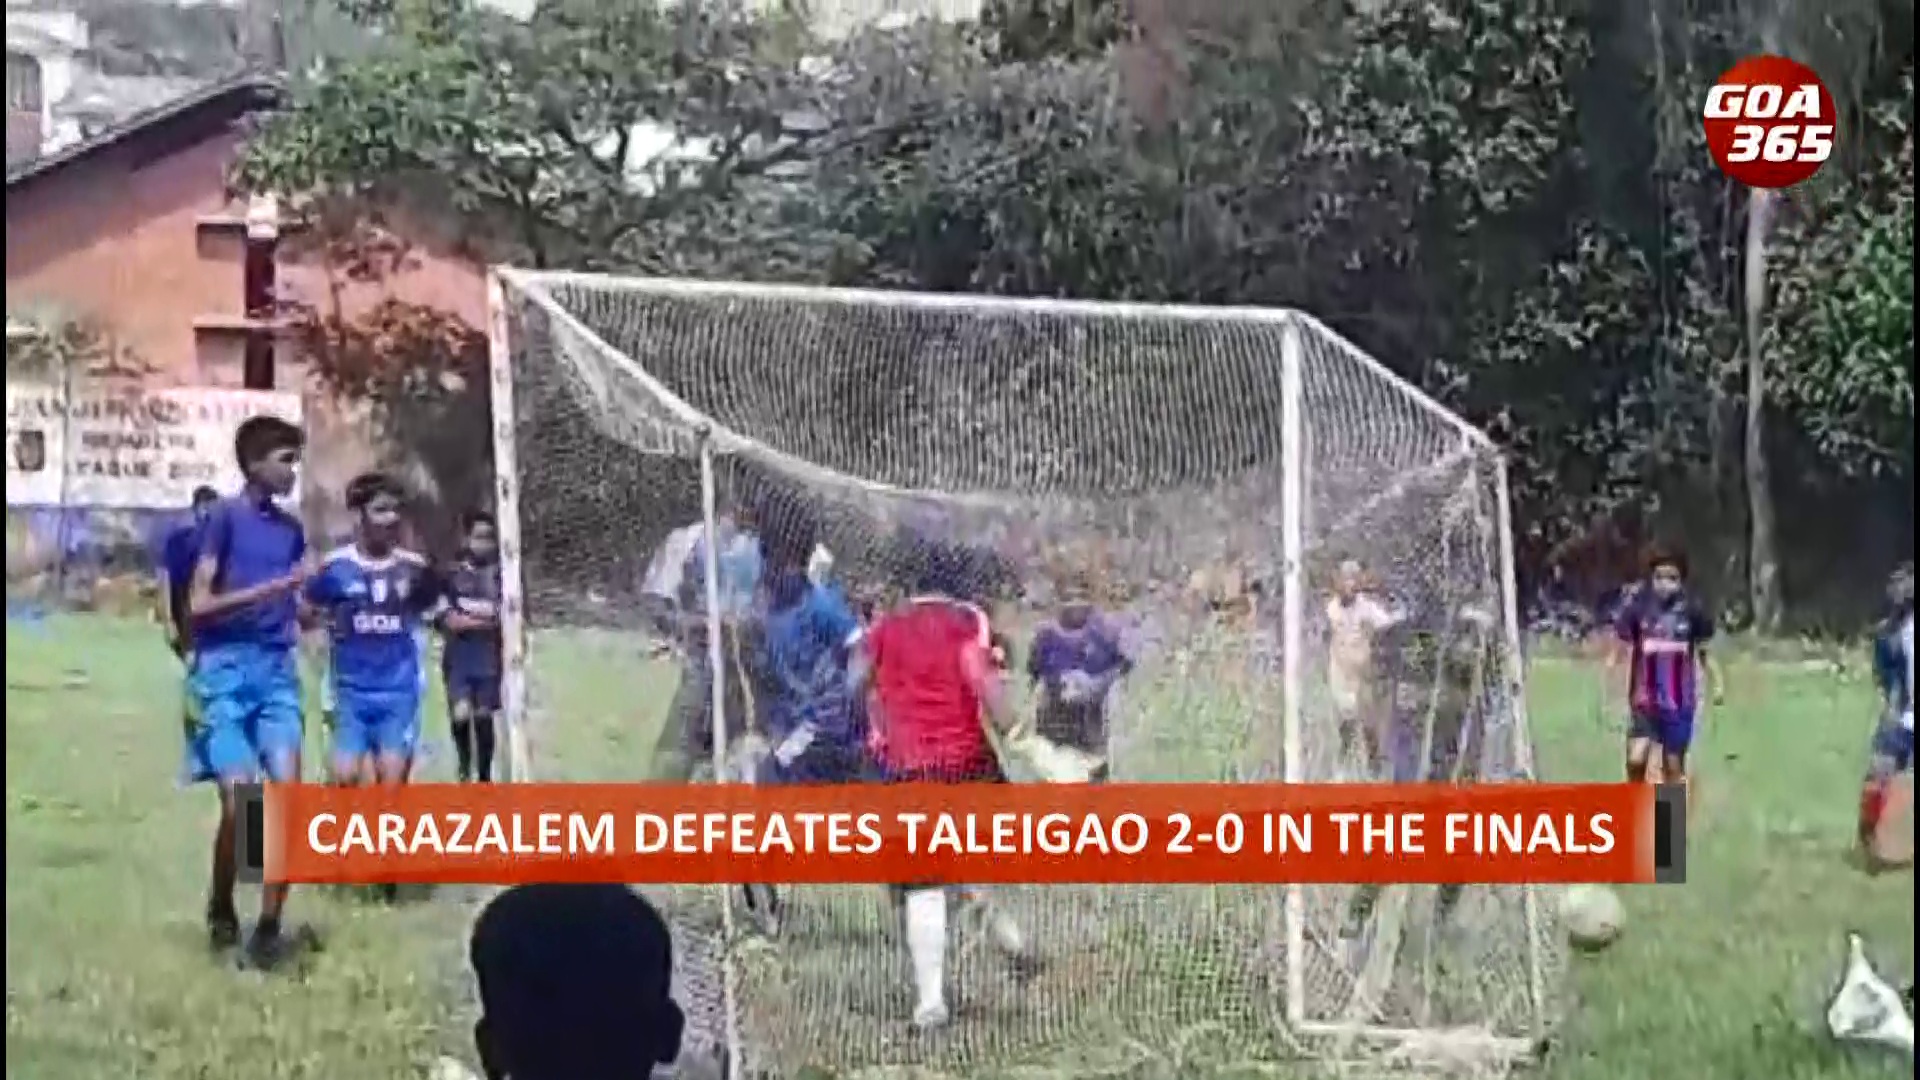 Caranzalem Alter Servers Lift Inter-Alter Boys Cup, defeats Taleigao Altar Servers 2-0||ENGLISH||GOA365